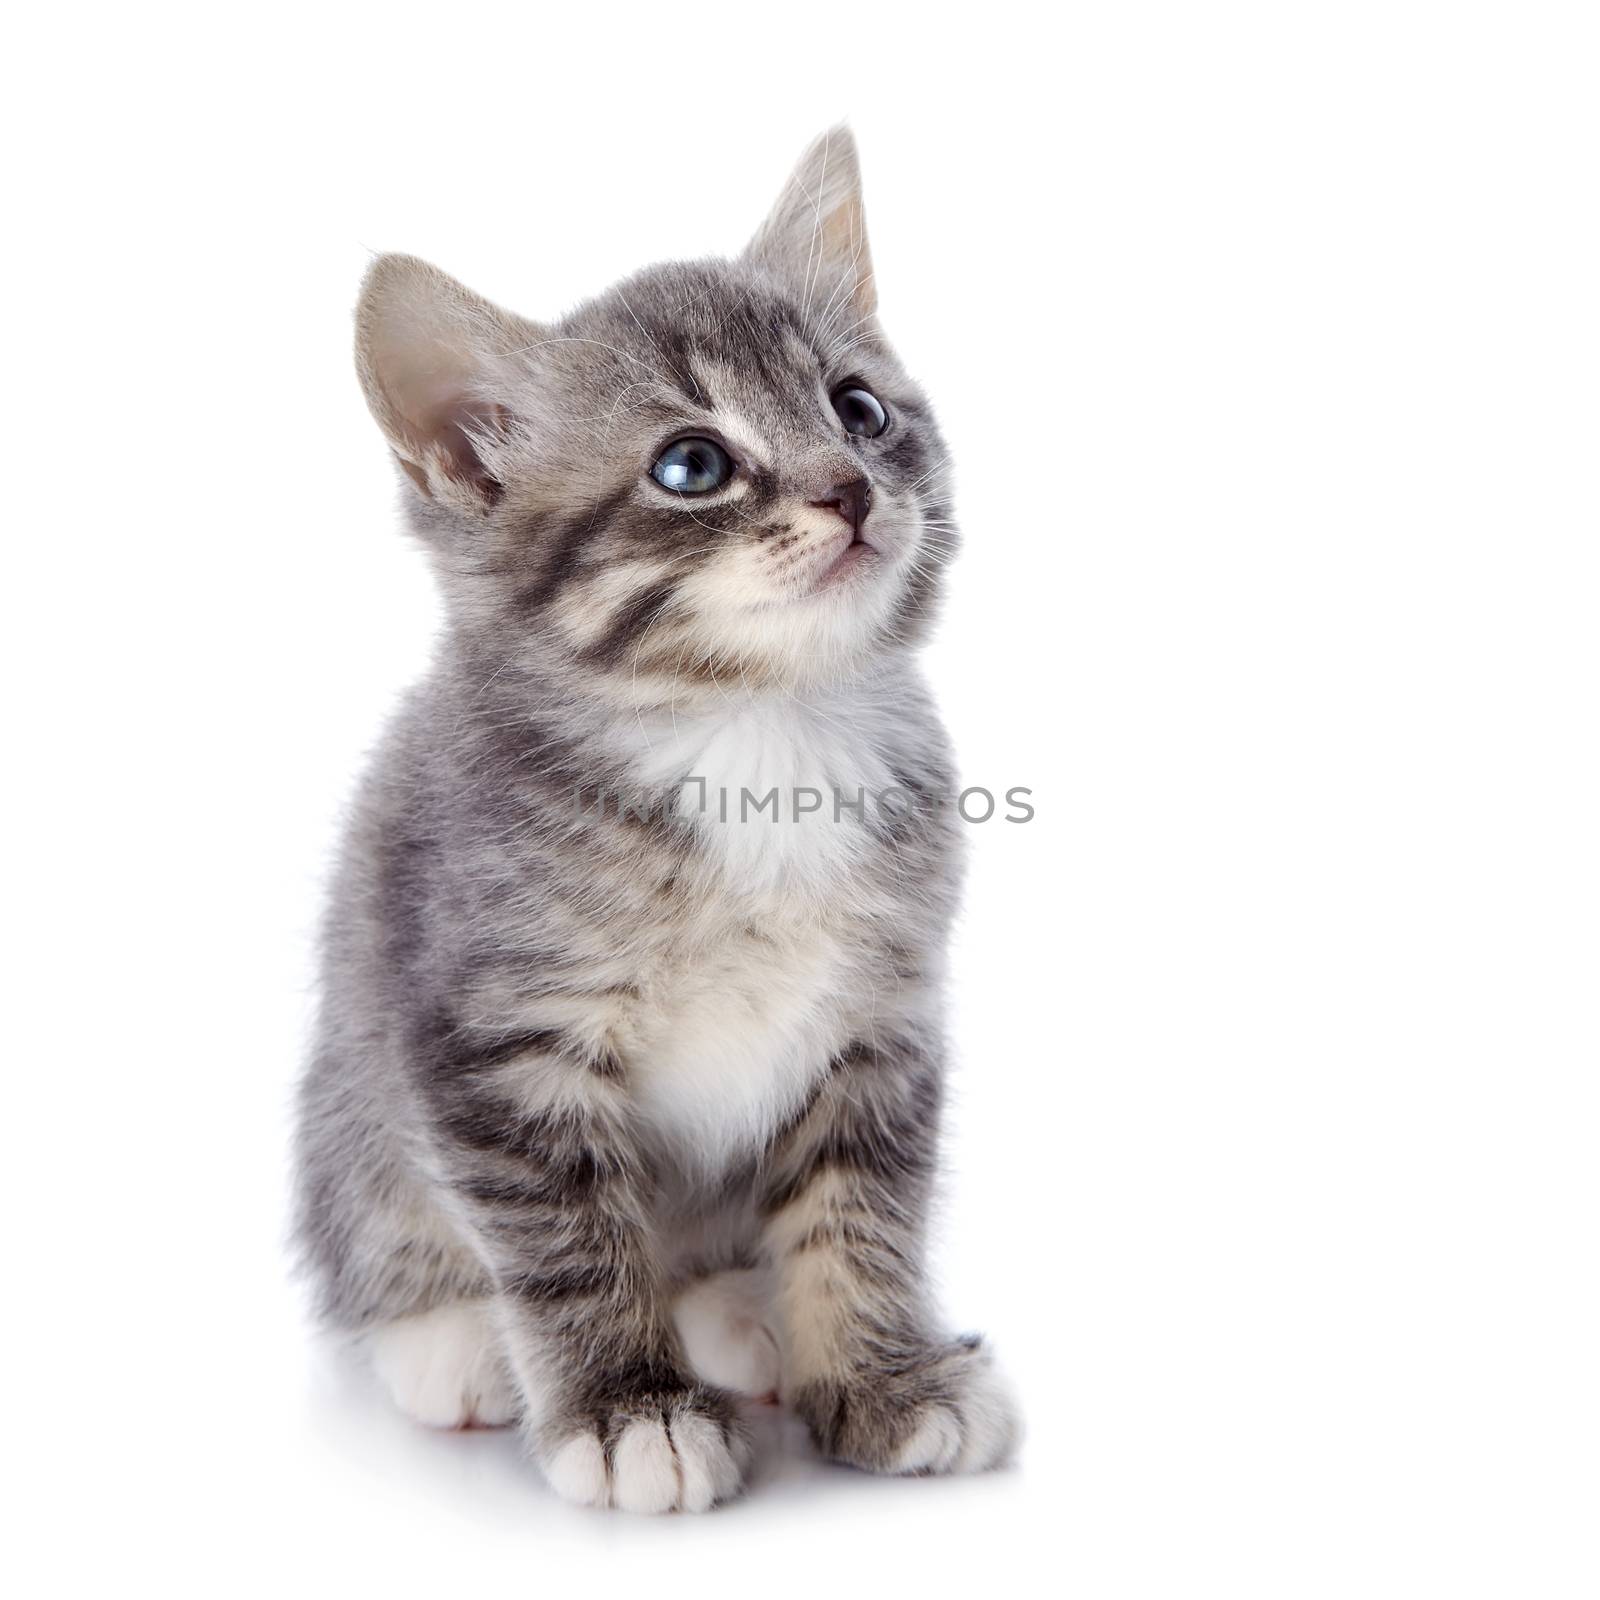 The gray striped kitten by Azaliya